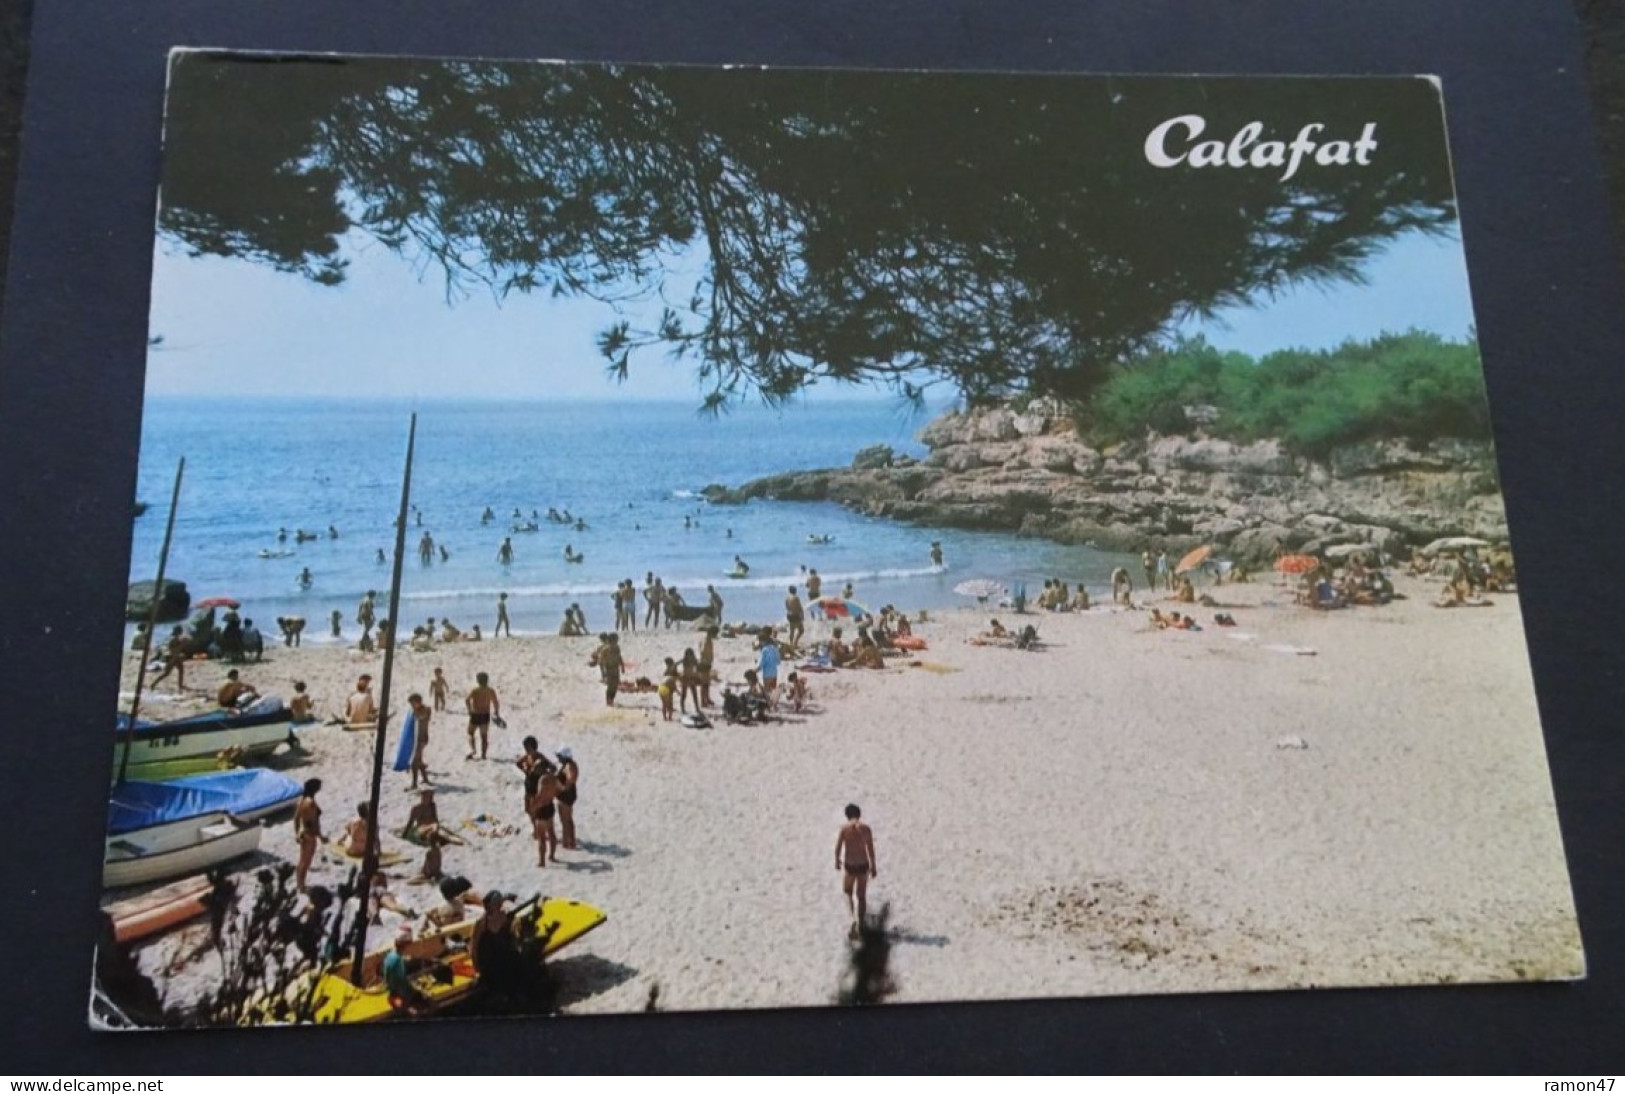 Calafat - Playa - Fotografia A. Campana, Postales Kolorham, Barcelona - # T.62115 - Tarragona